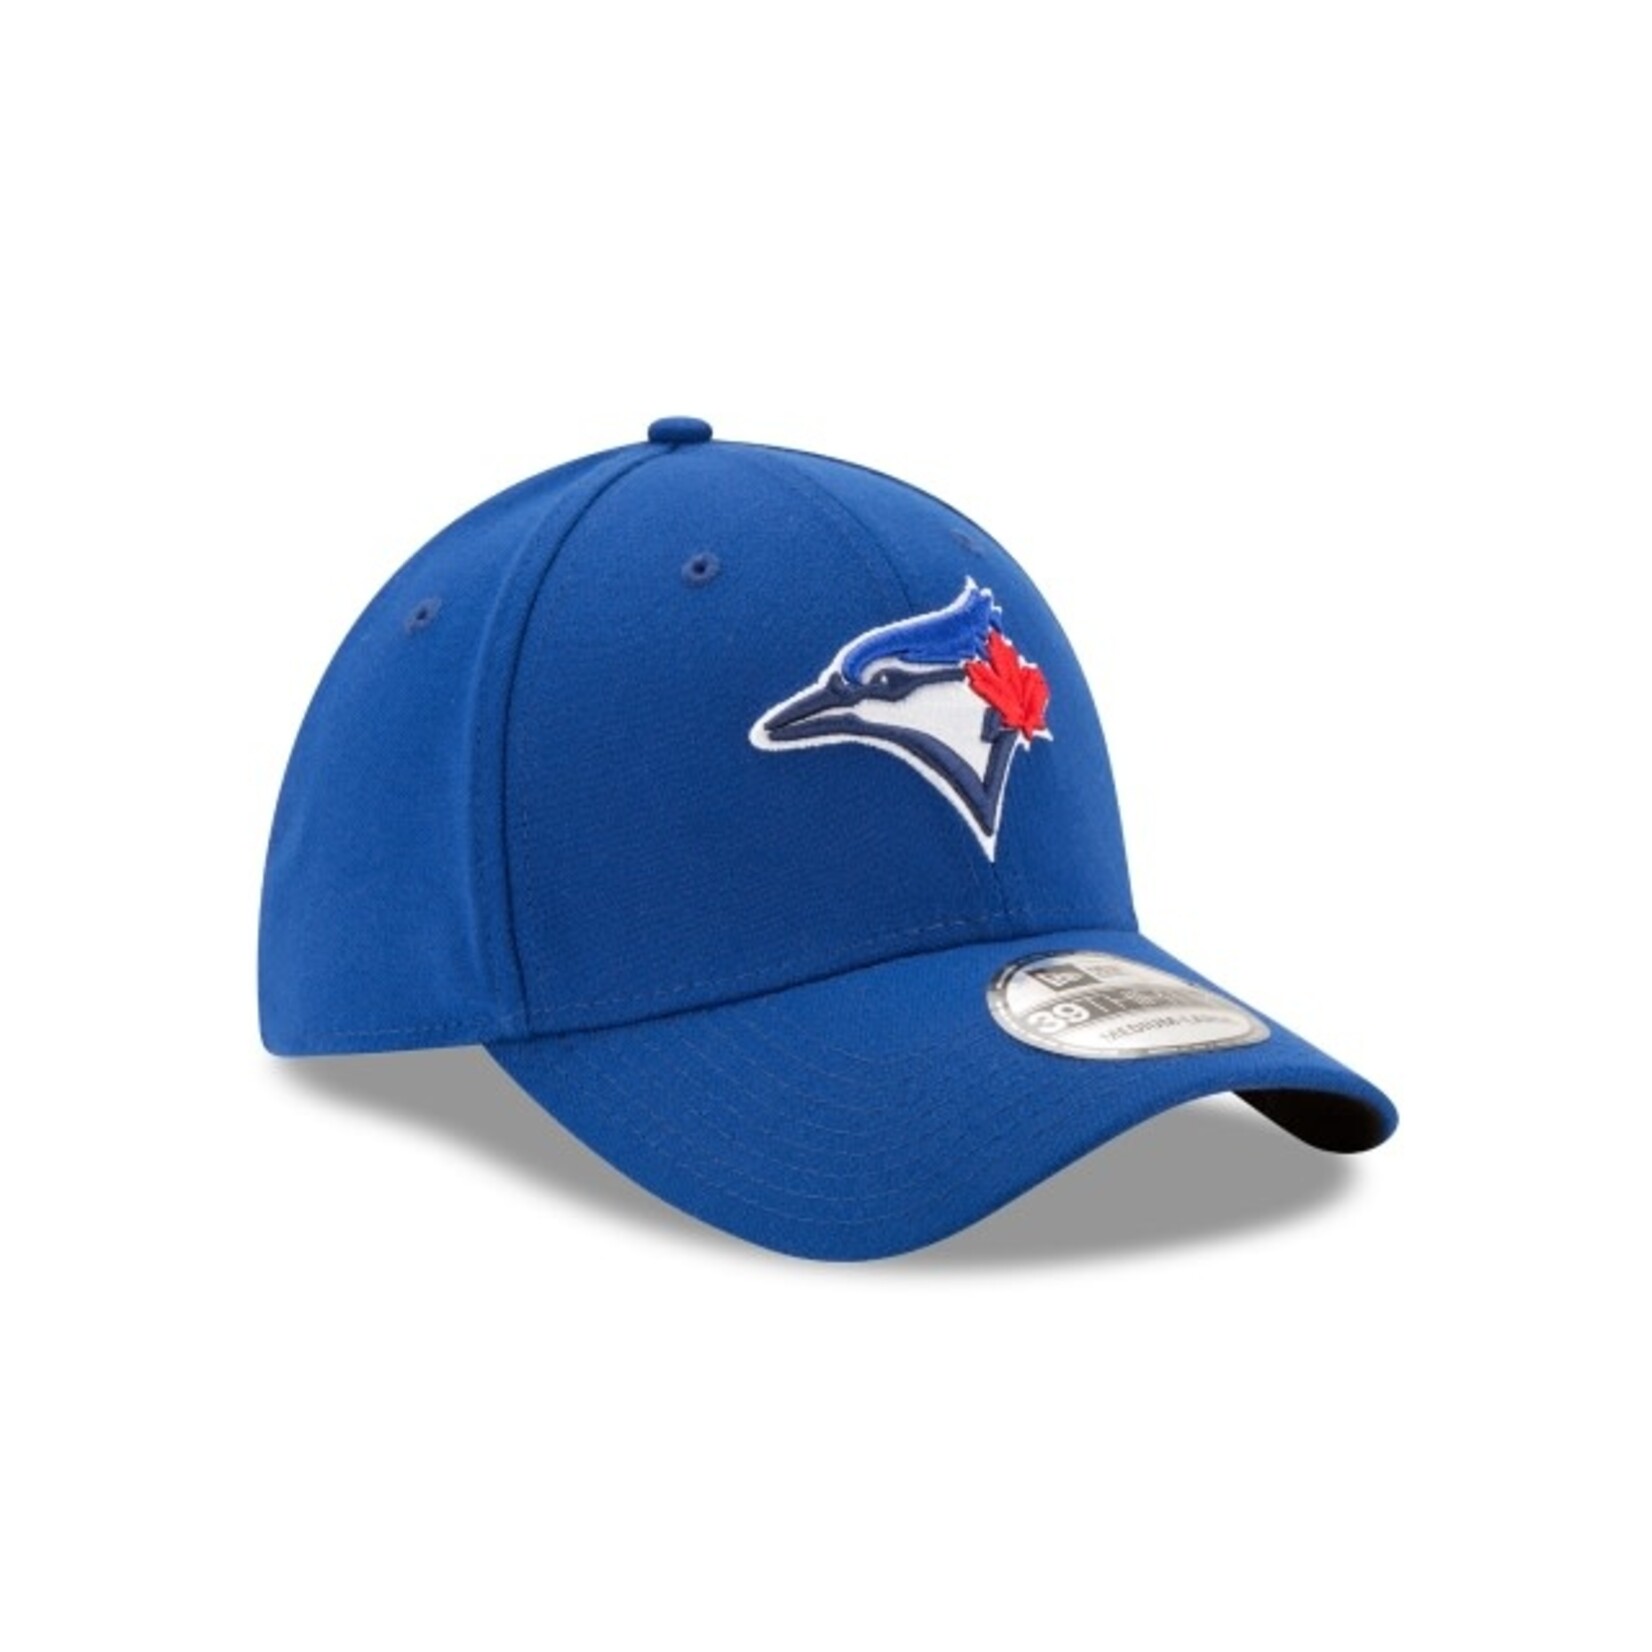 New Era New Era Hat, 3930 Team Classic, MLB, Toronto Blue Jays, Game